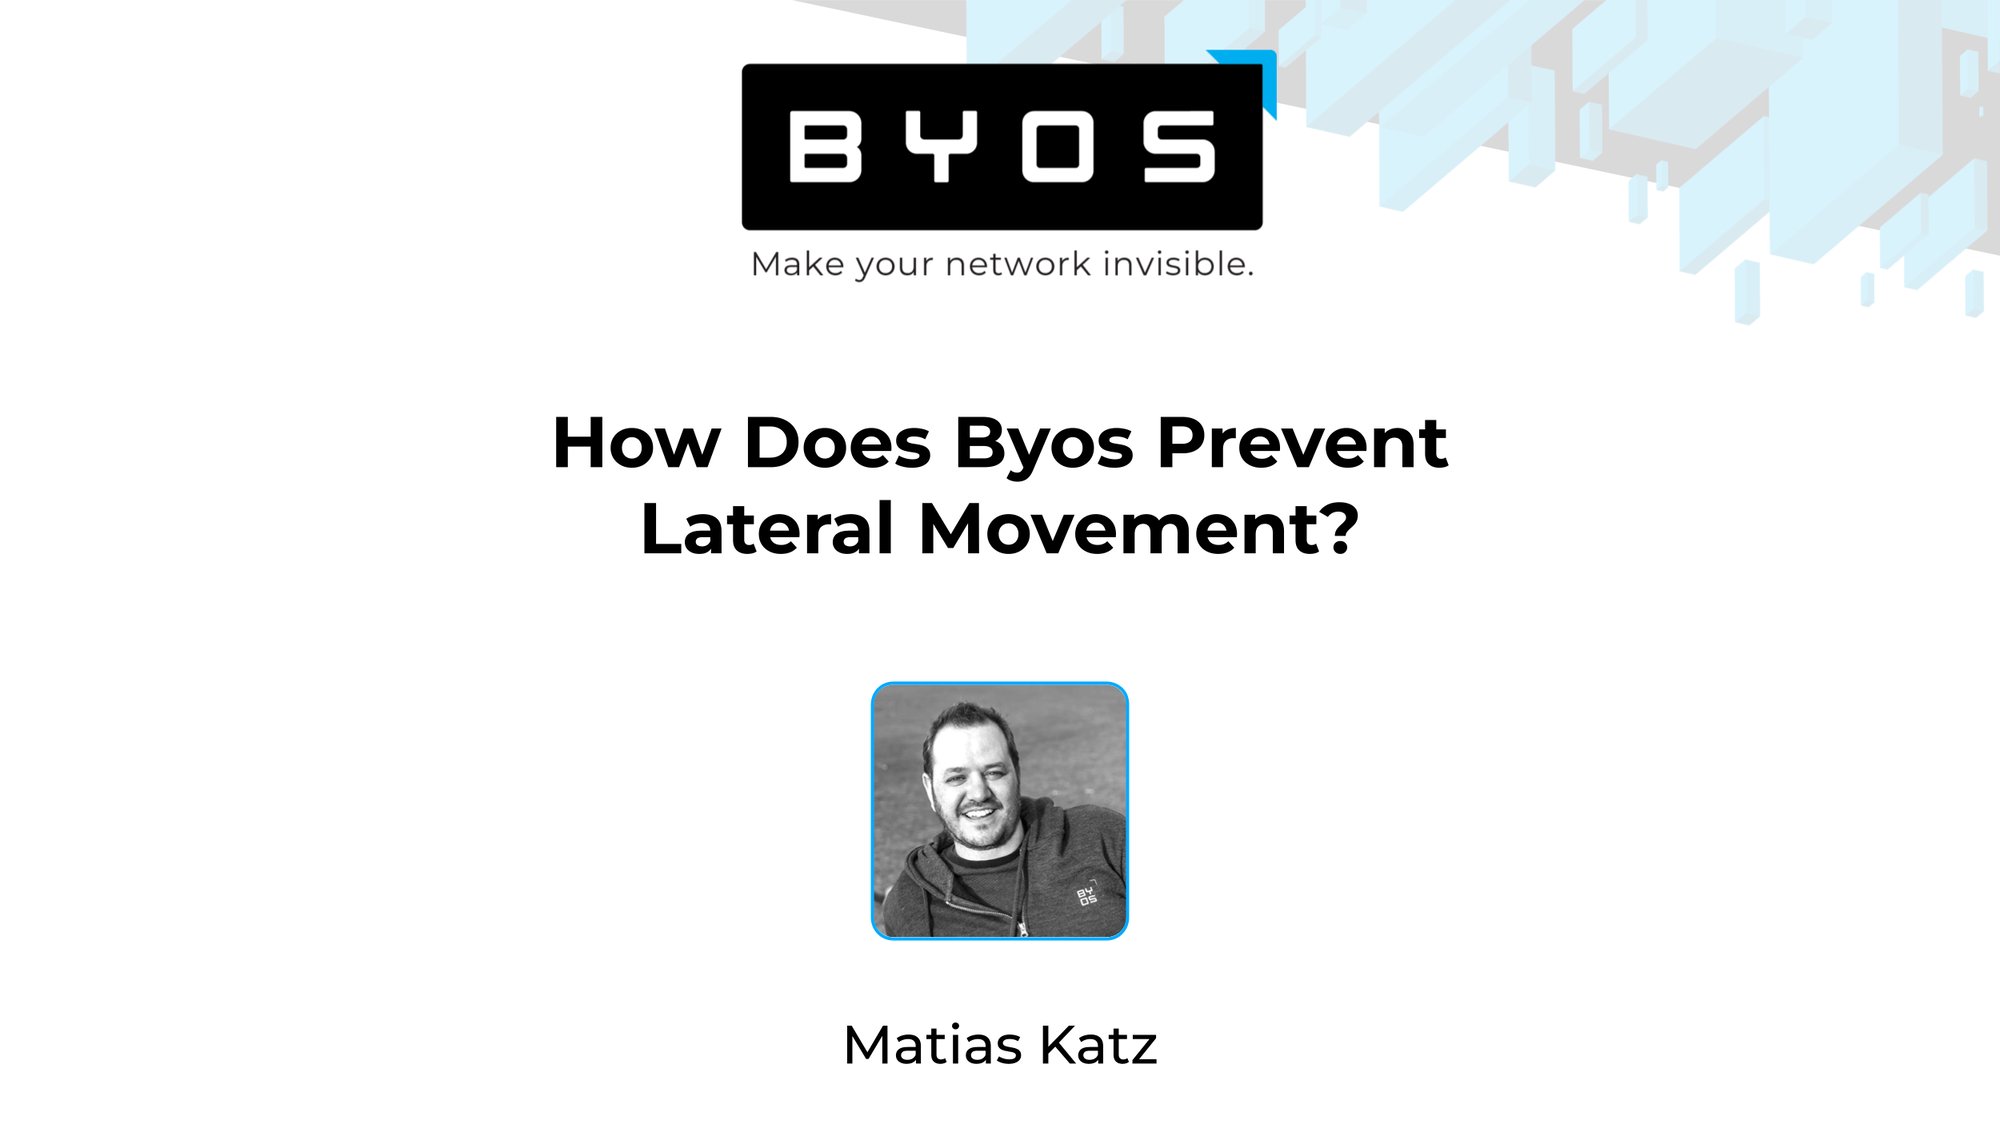 Byos Prevent Lateral Movement clip 3 (1)